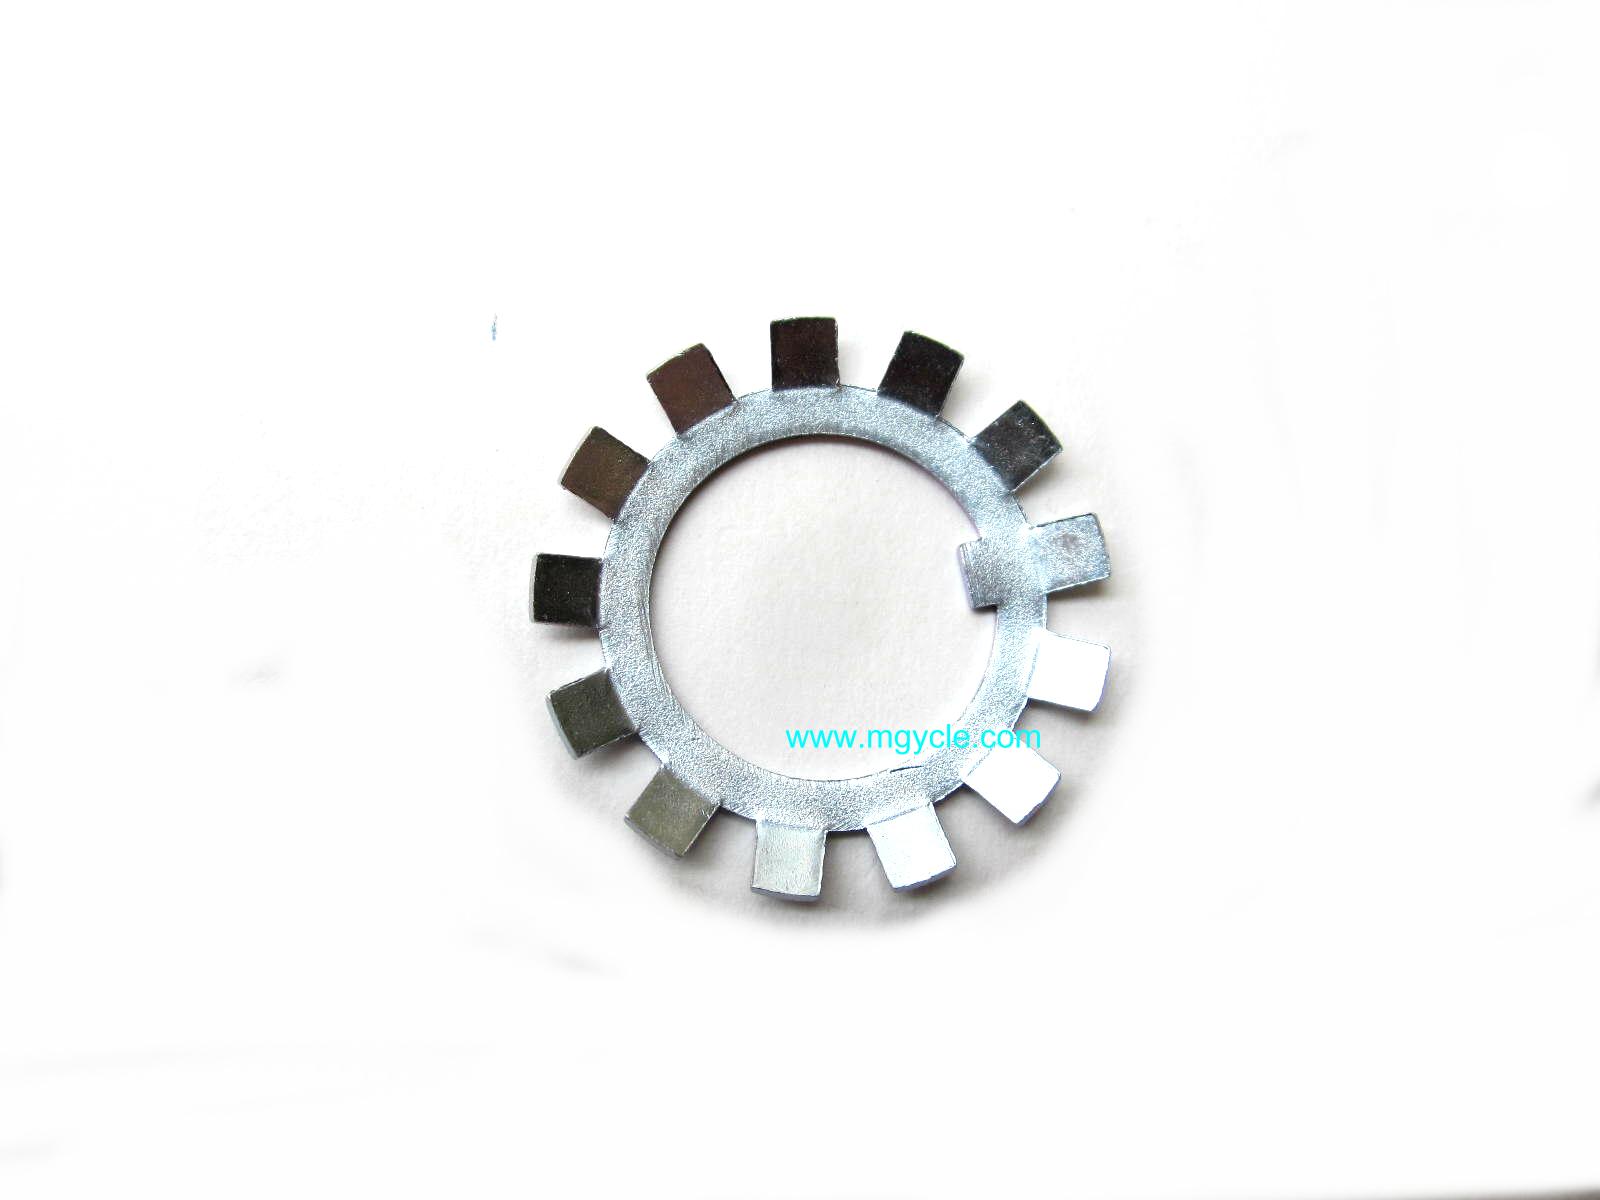 Star washer for crankshaft ring nut, V11 Sport 6 speed input hub